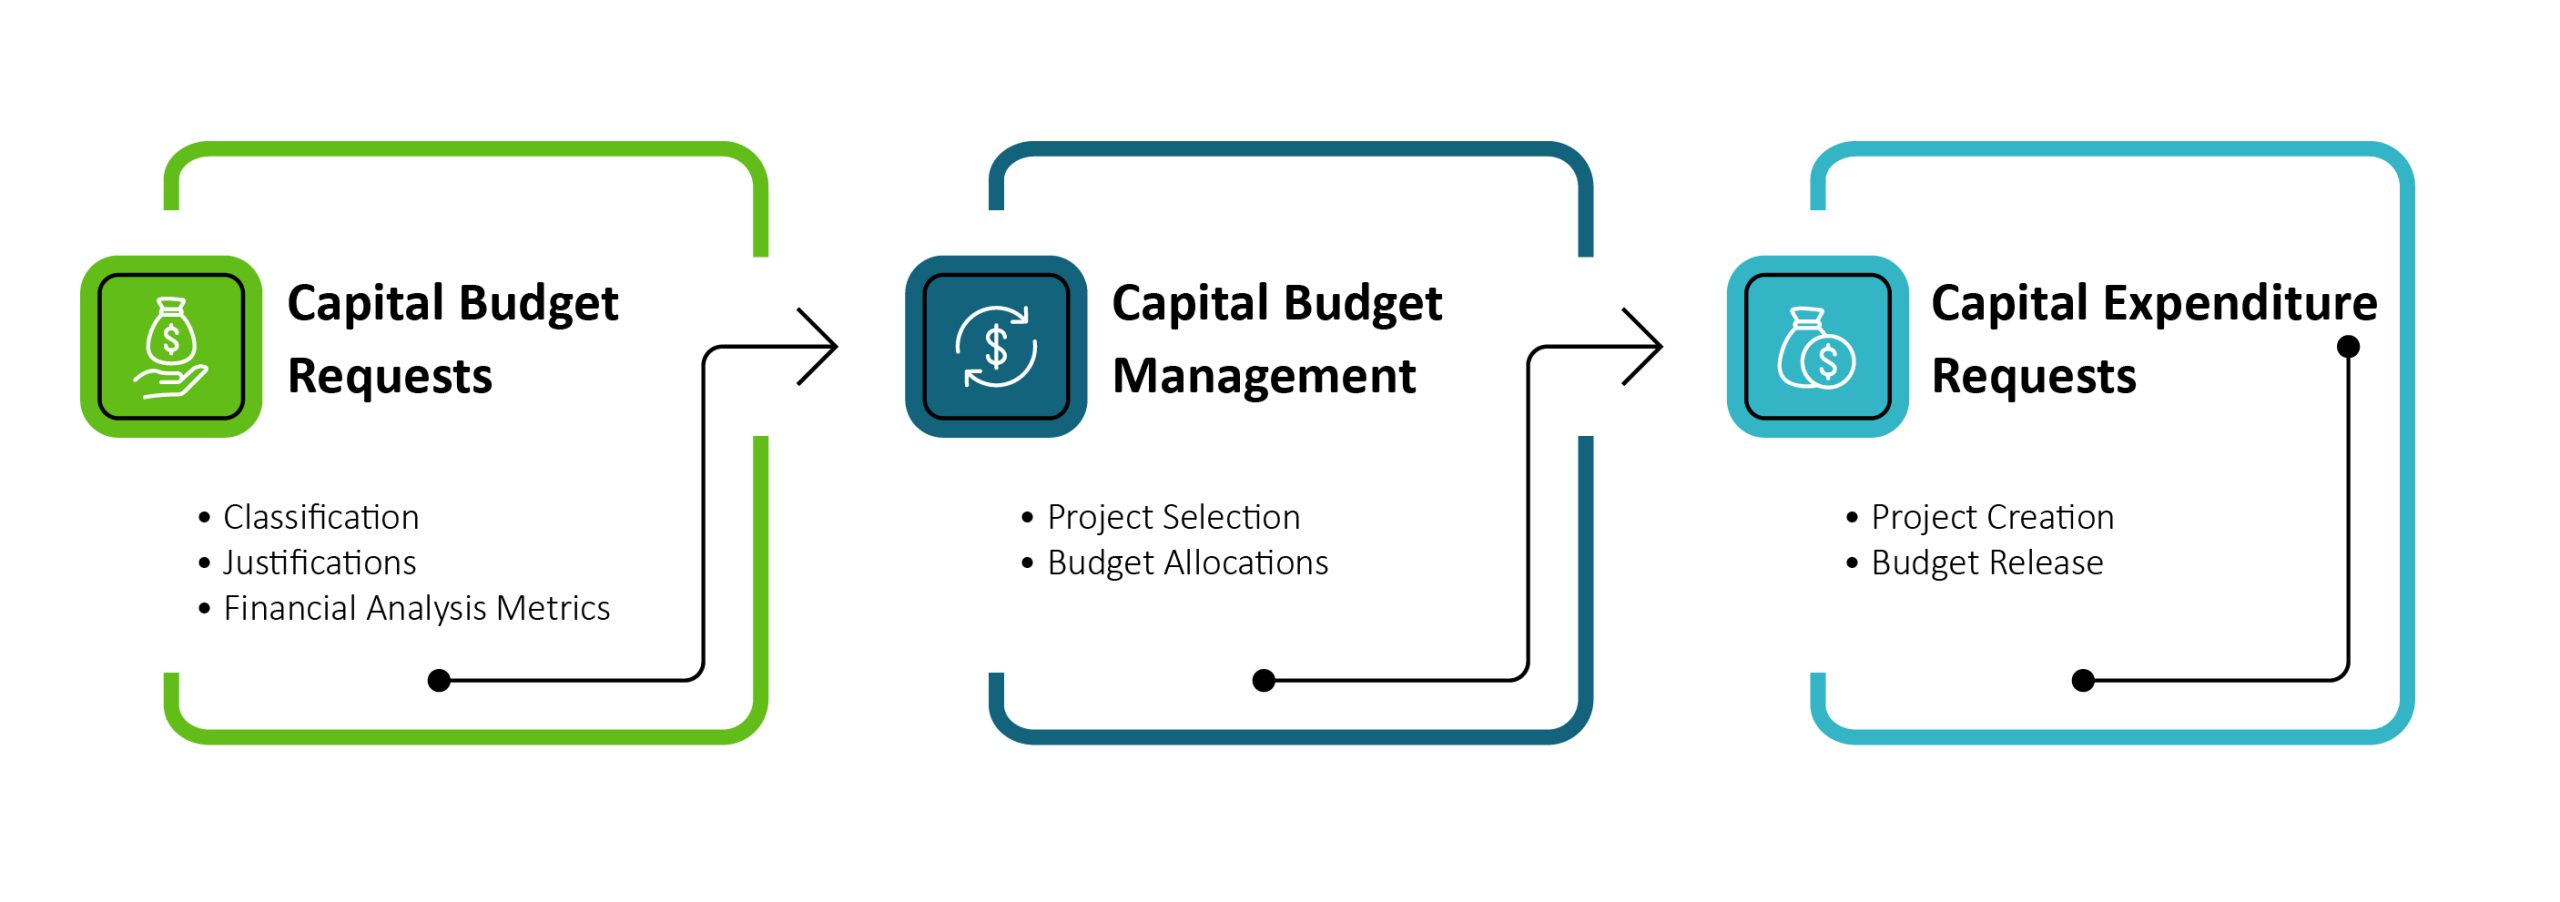 Capital Expenditure Request process diagram